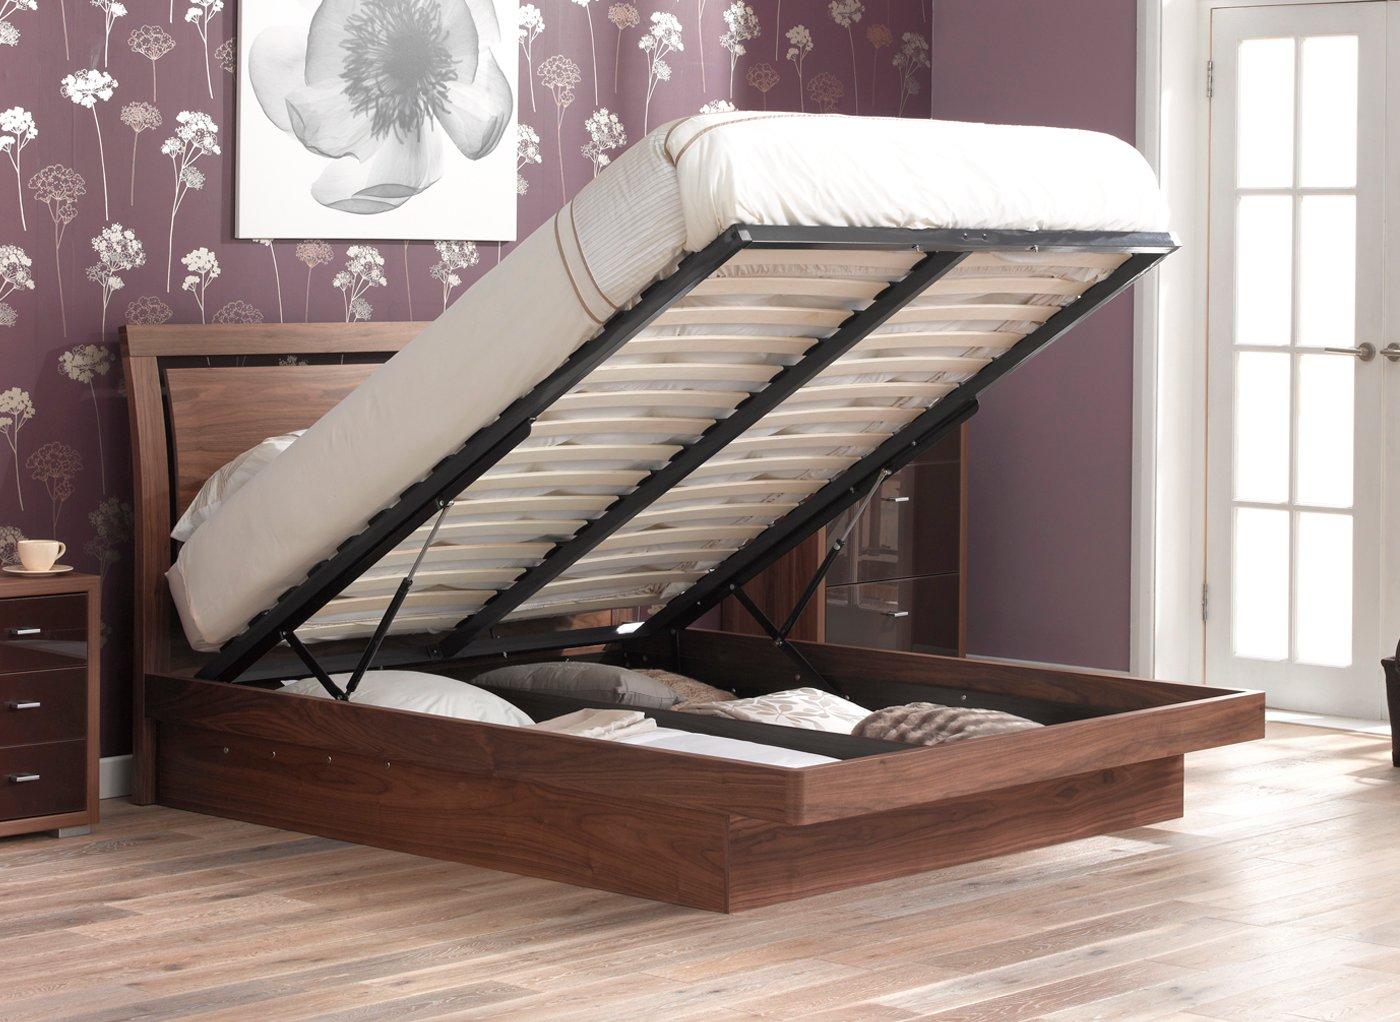 ottoman style sofa bed